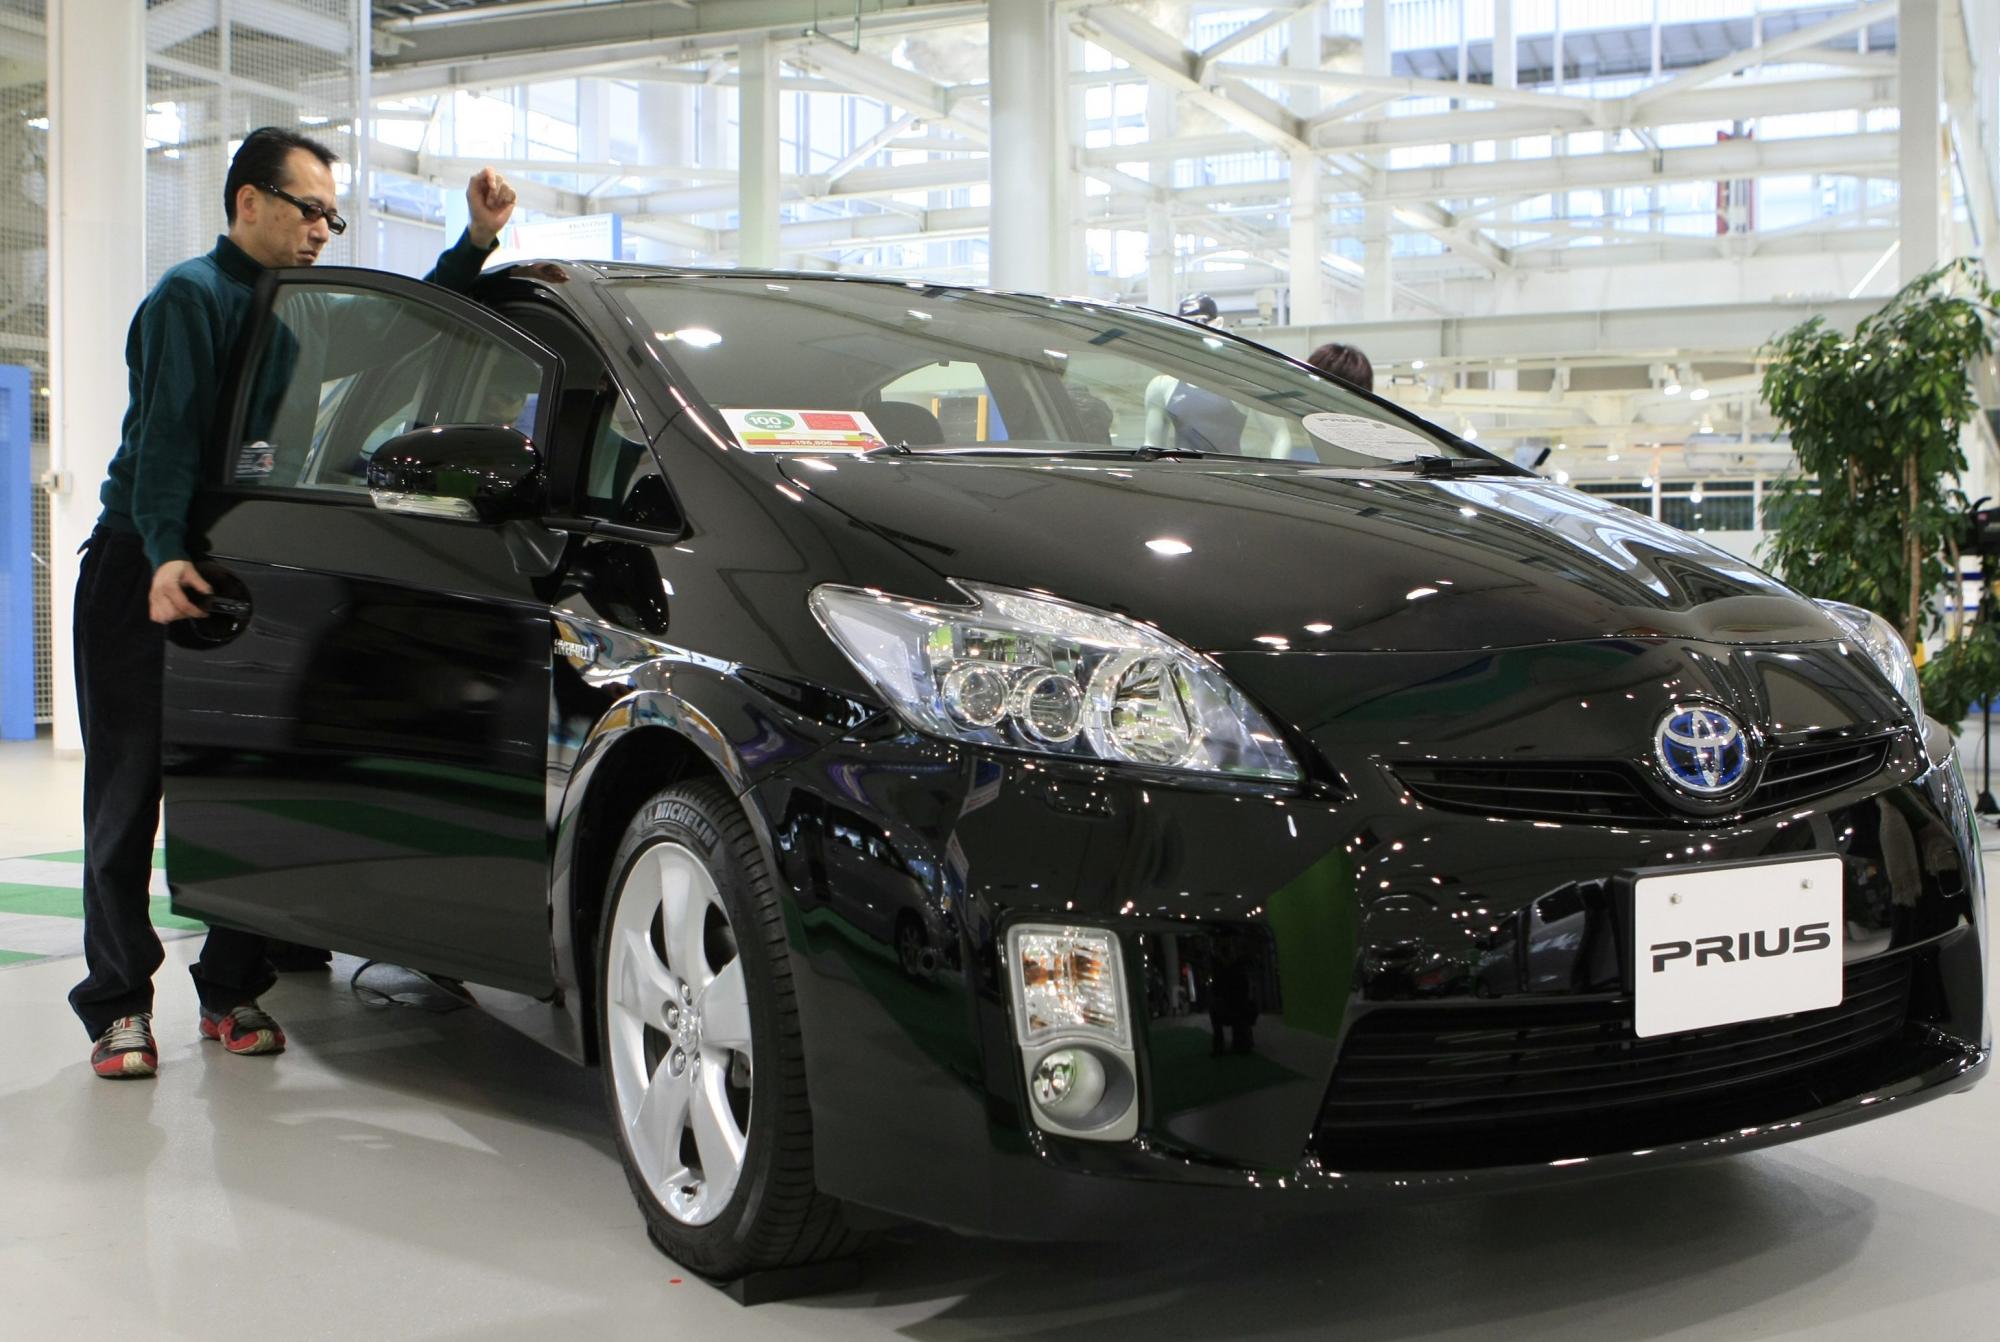 Toyota to recall 300,000 Priuses worldwide